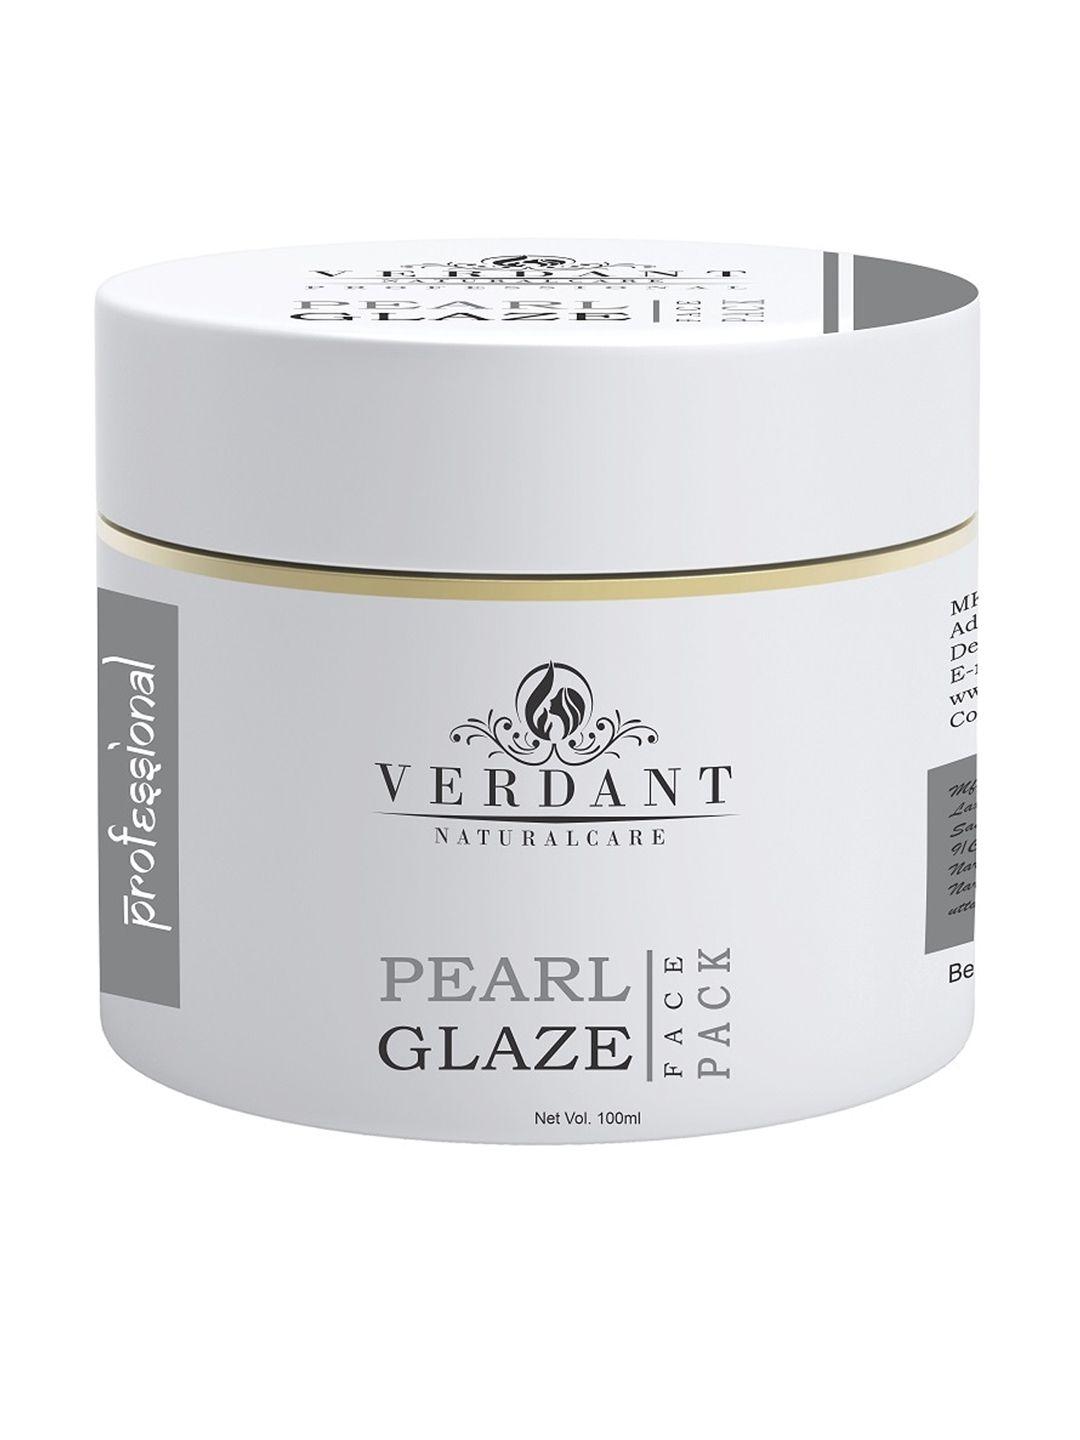 verdant natural care pearl glaze face pack 100 ml